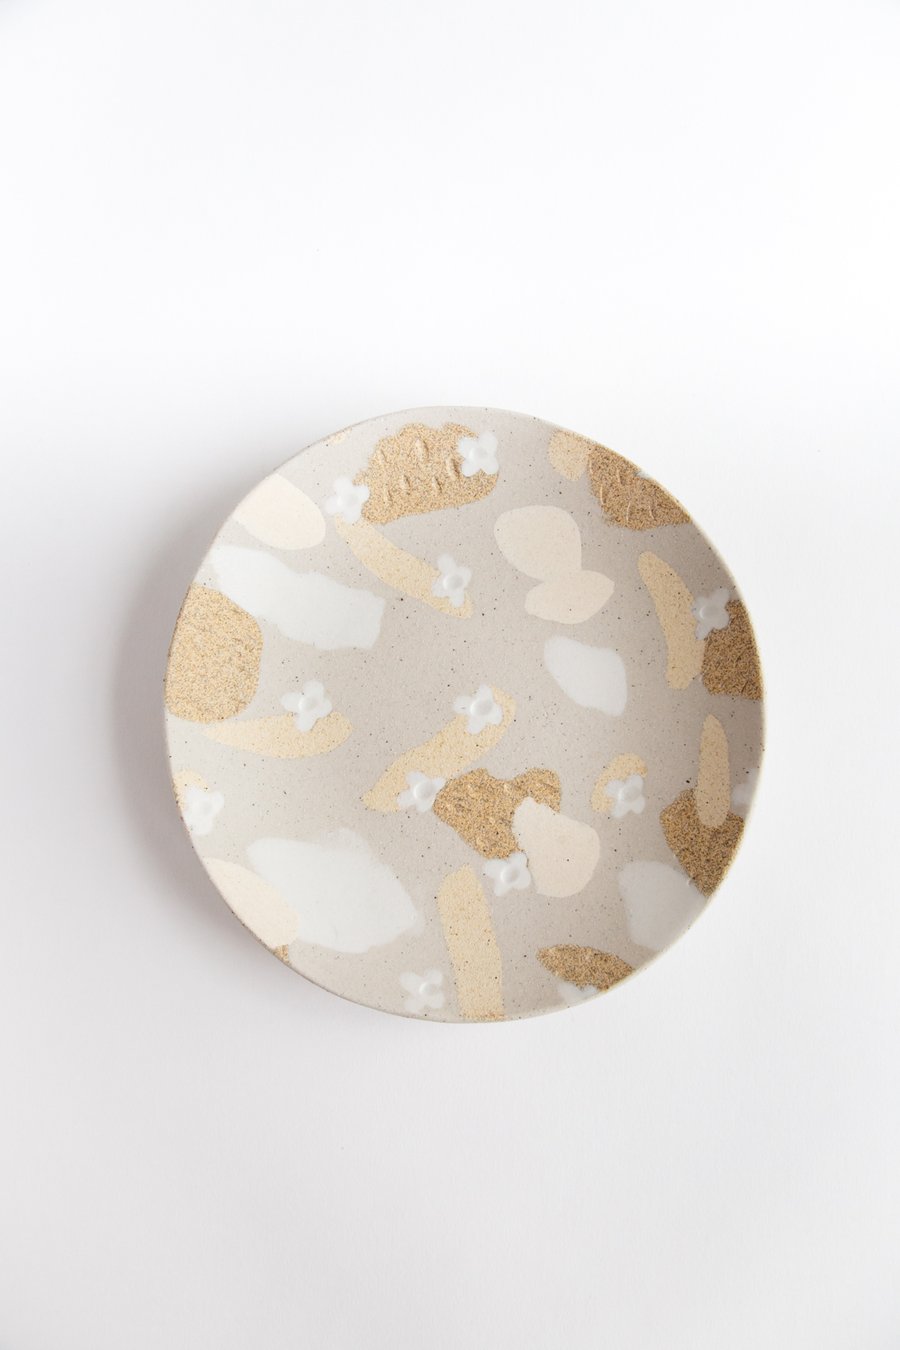 Image of Pale Dessert Flowers - Platter 8" Round